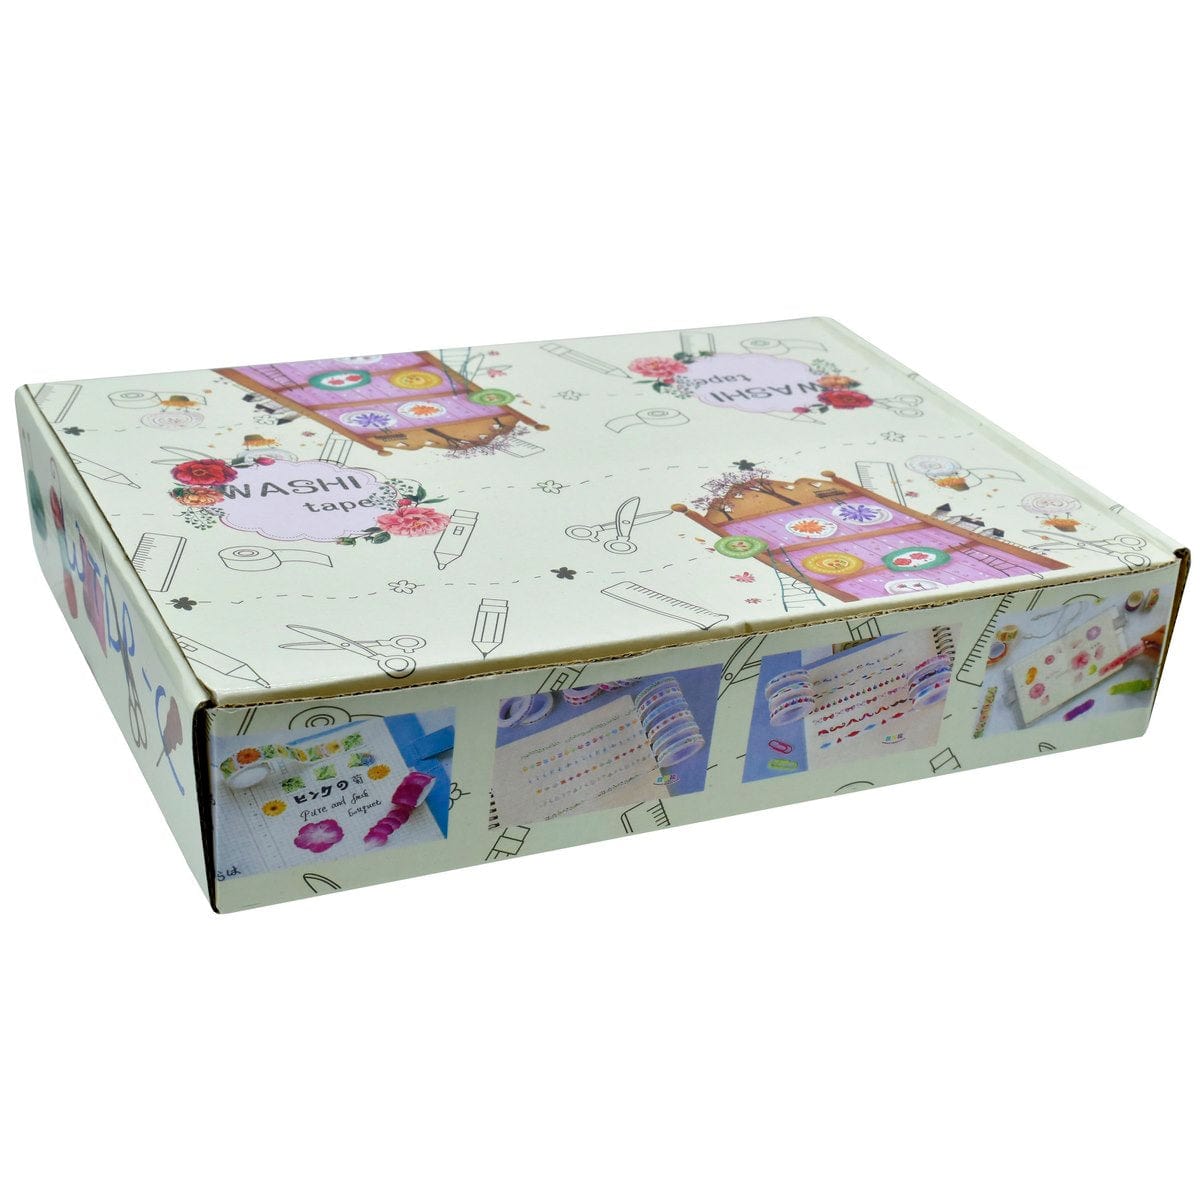 jags-mumbai Washi Tape Washi Tape 1.5CM*3M (60Pcs Box)